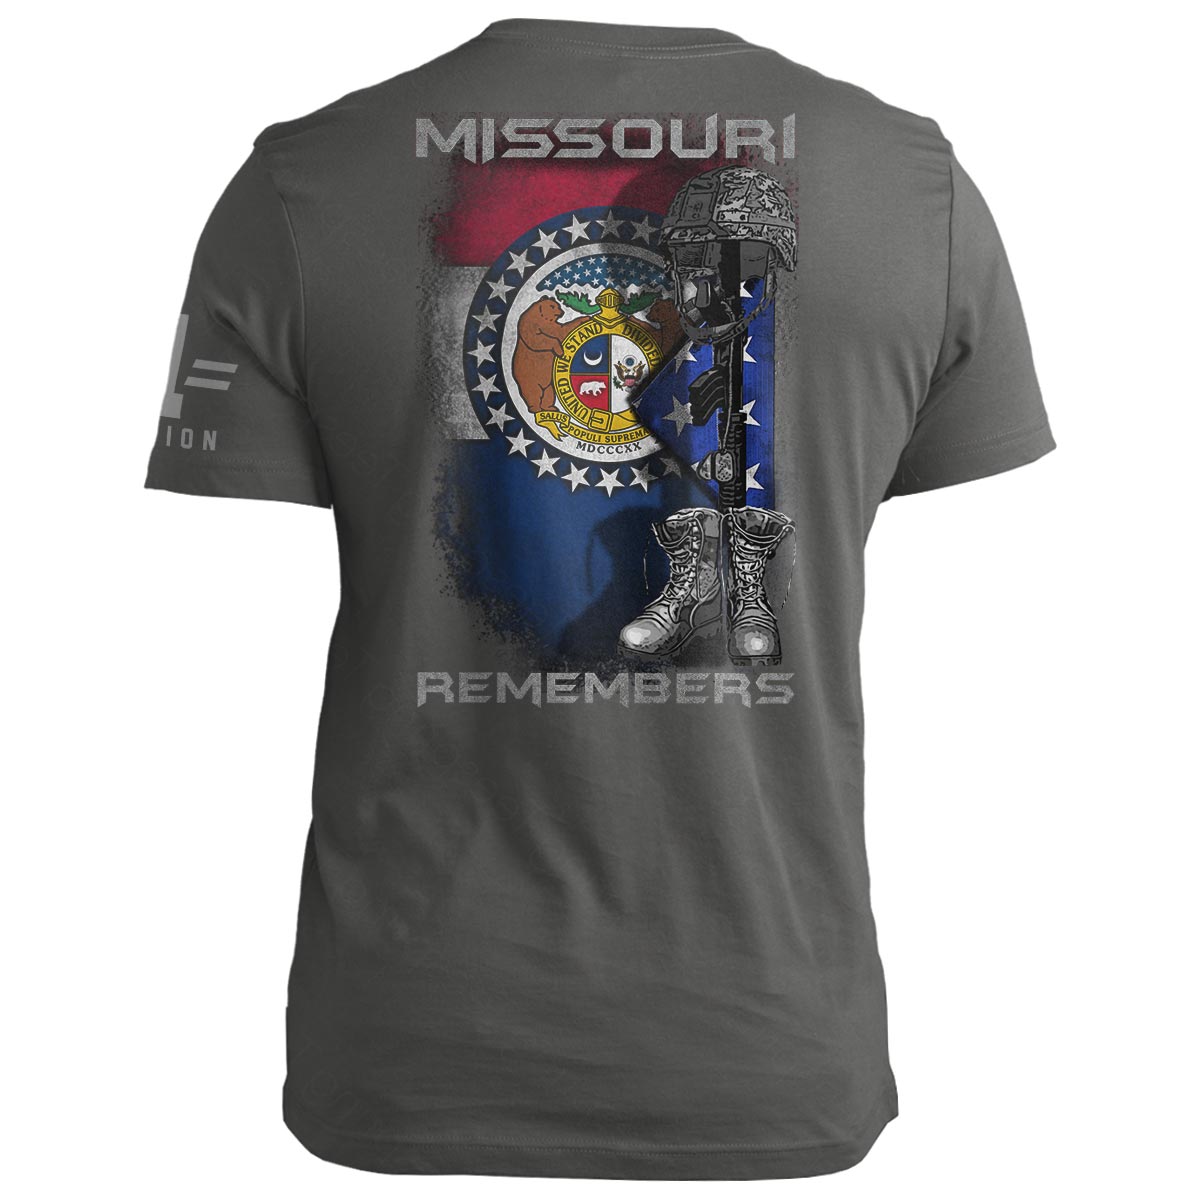 Missouri Remembers